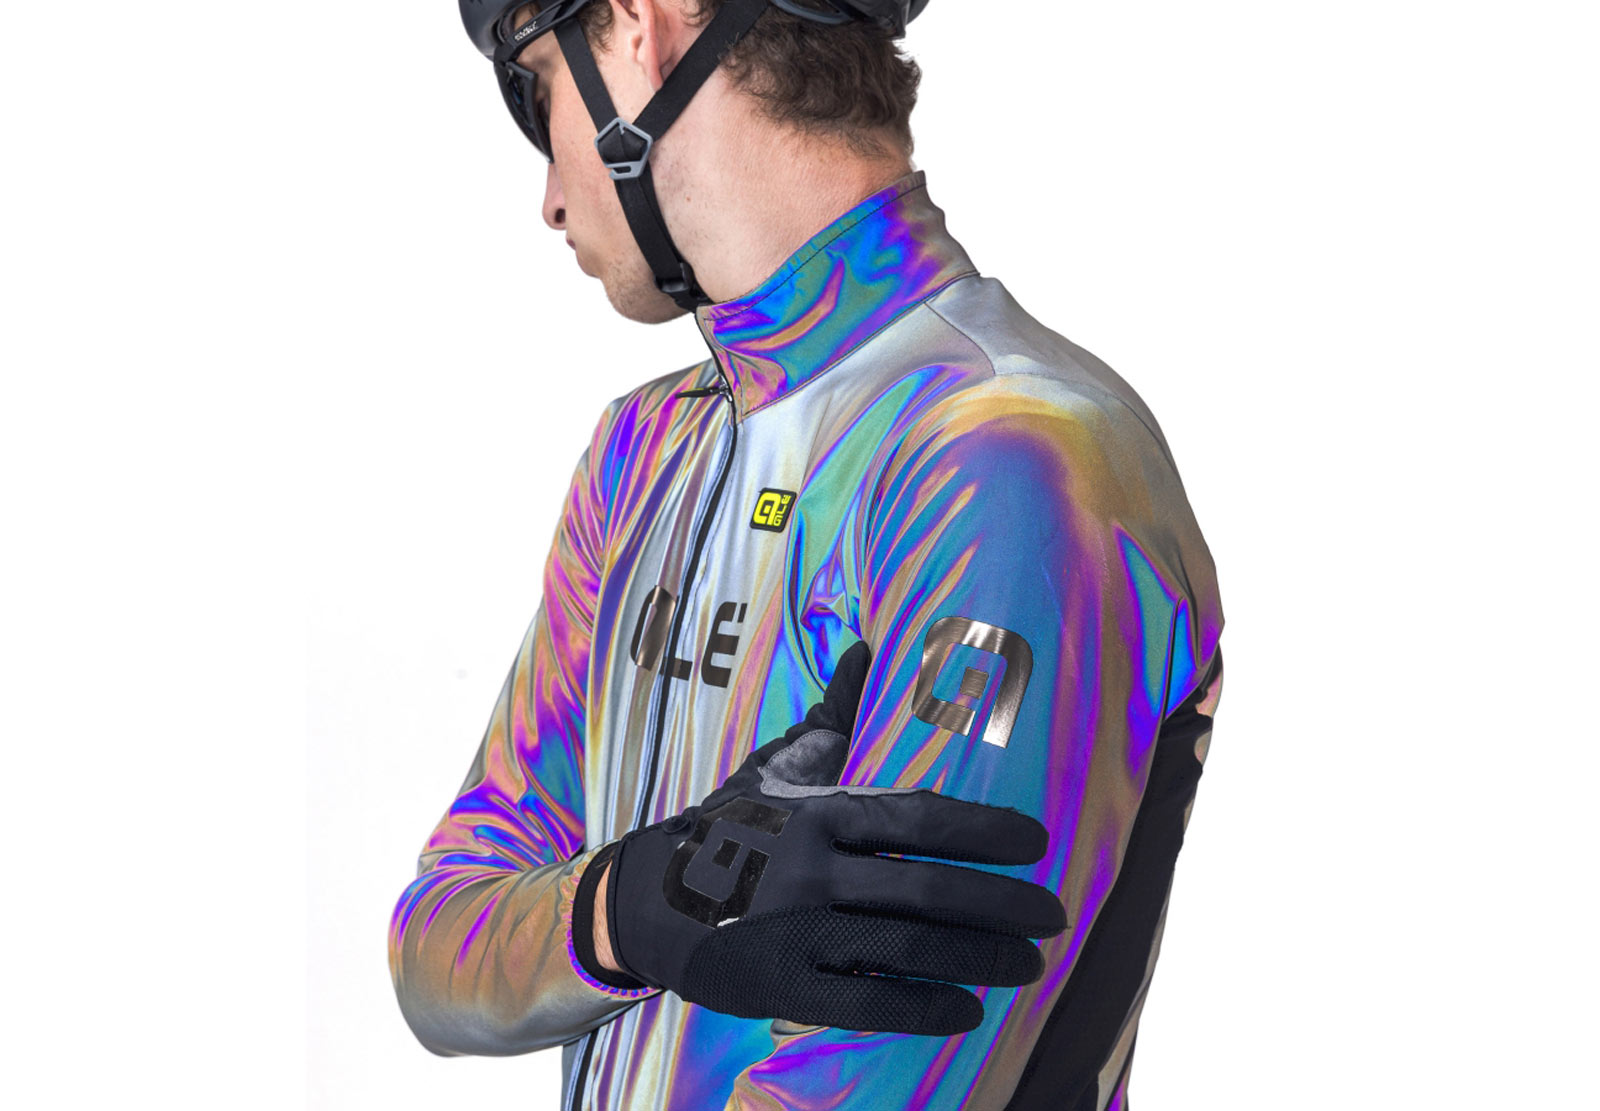 https://bikerumor.com/wp-content/uploads/2021/12/oil-slick-cycling-jacket-ale-guscio-iridescent-windproof-2.jpg